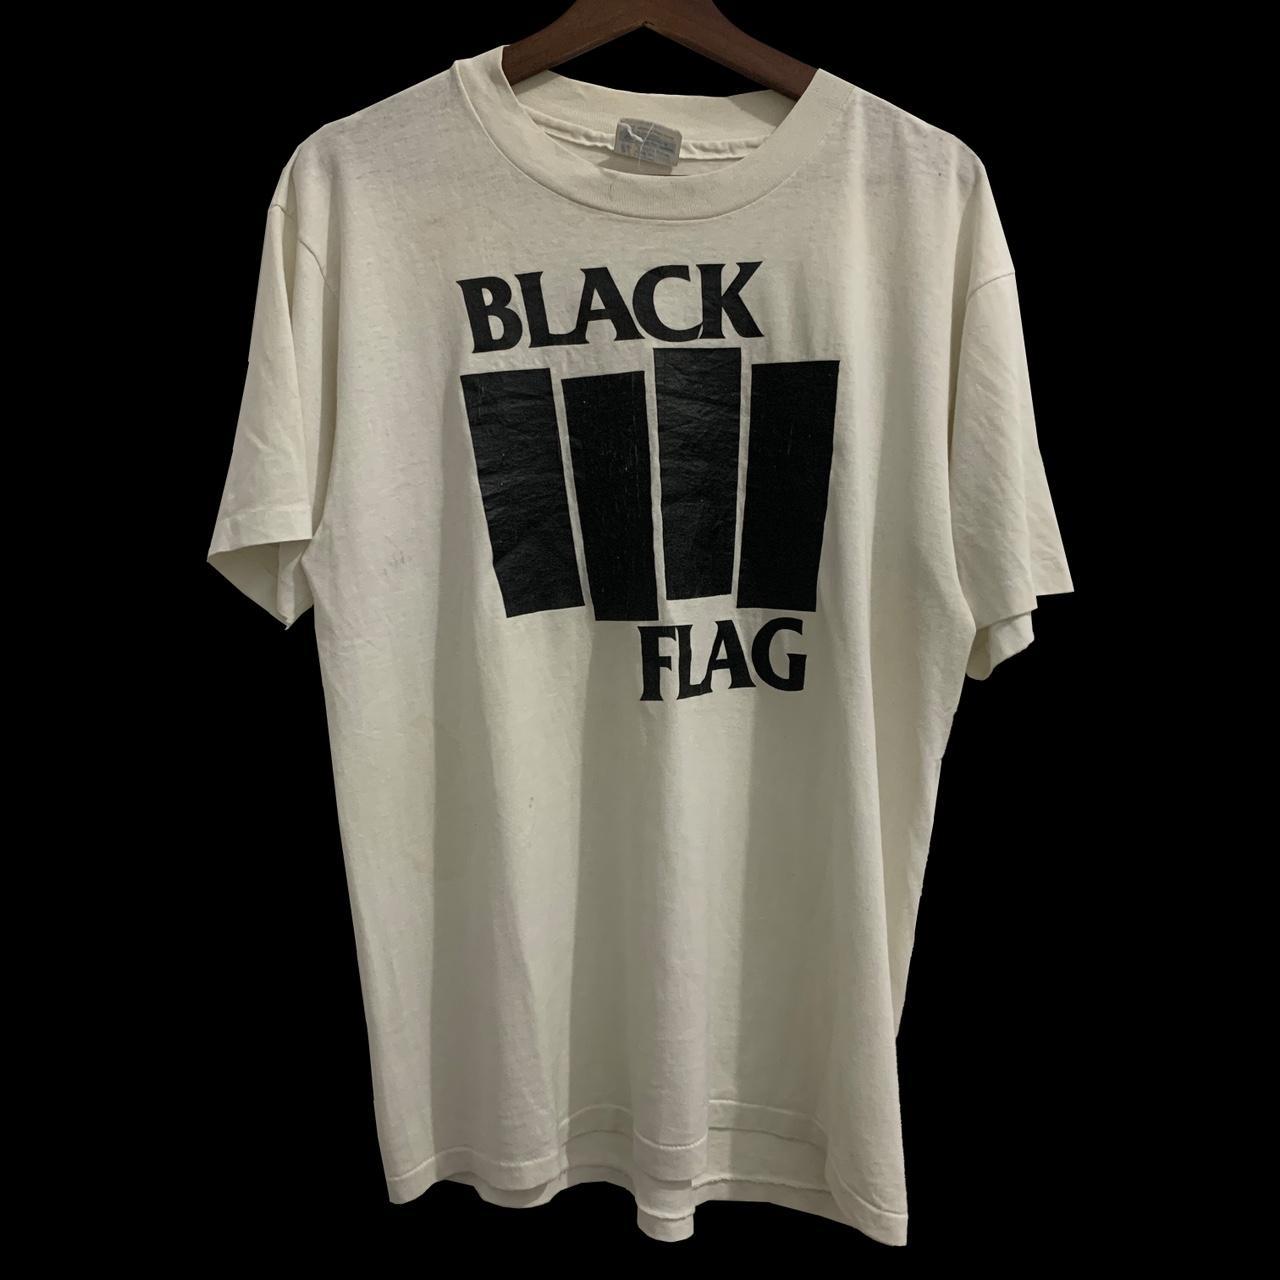 Vintage Rare 1980s Black Flag Band Tee Shirt Hanes... - Depop